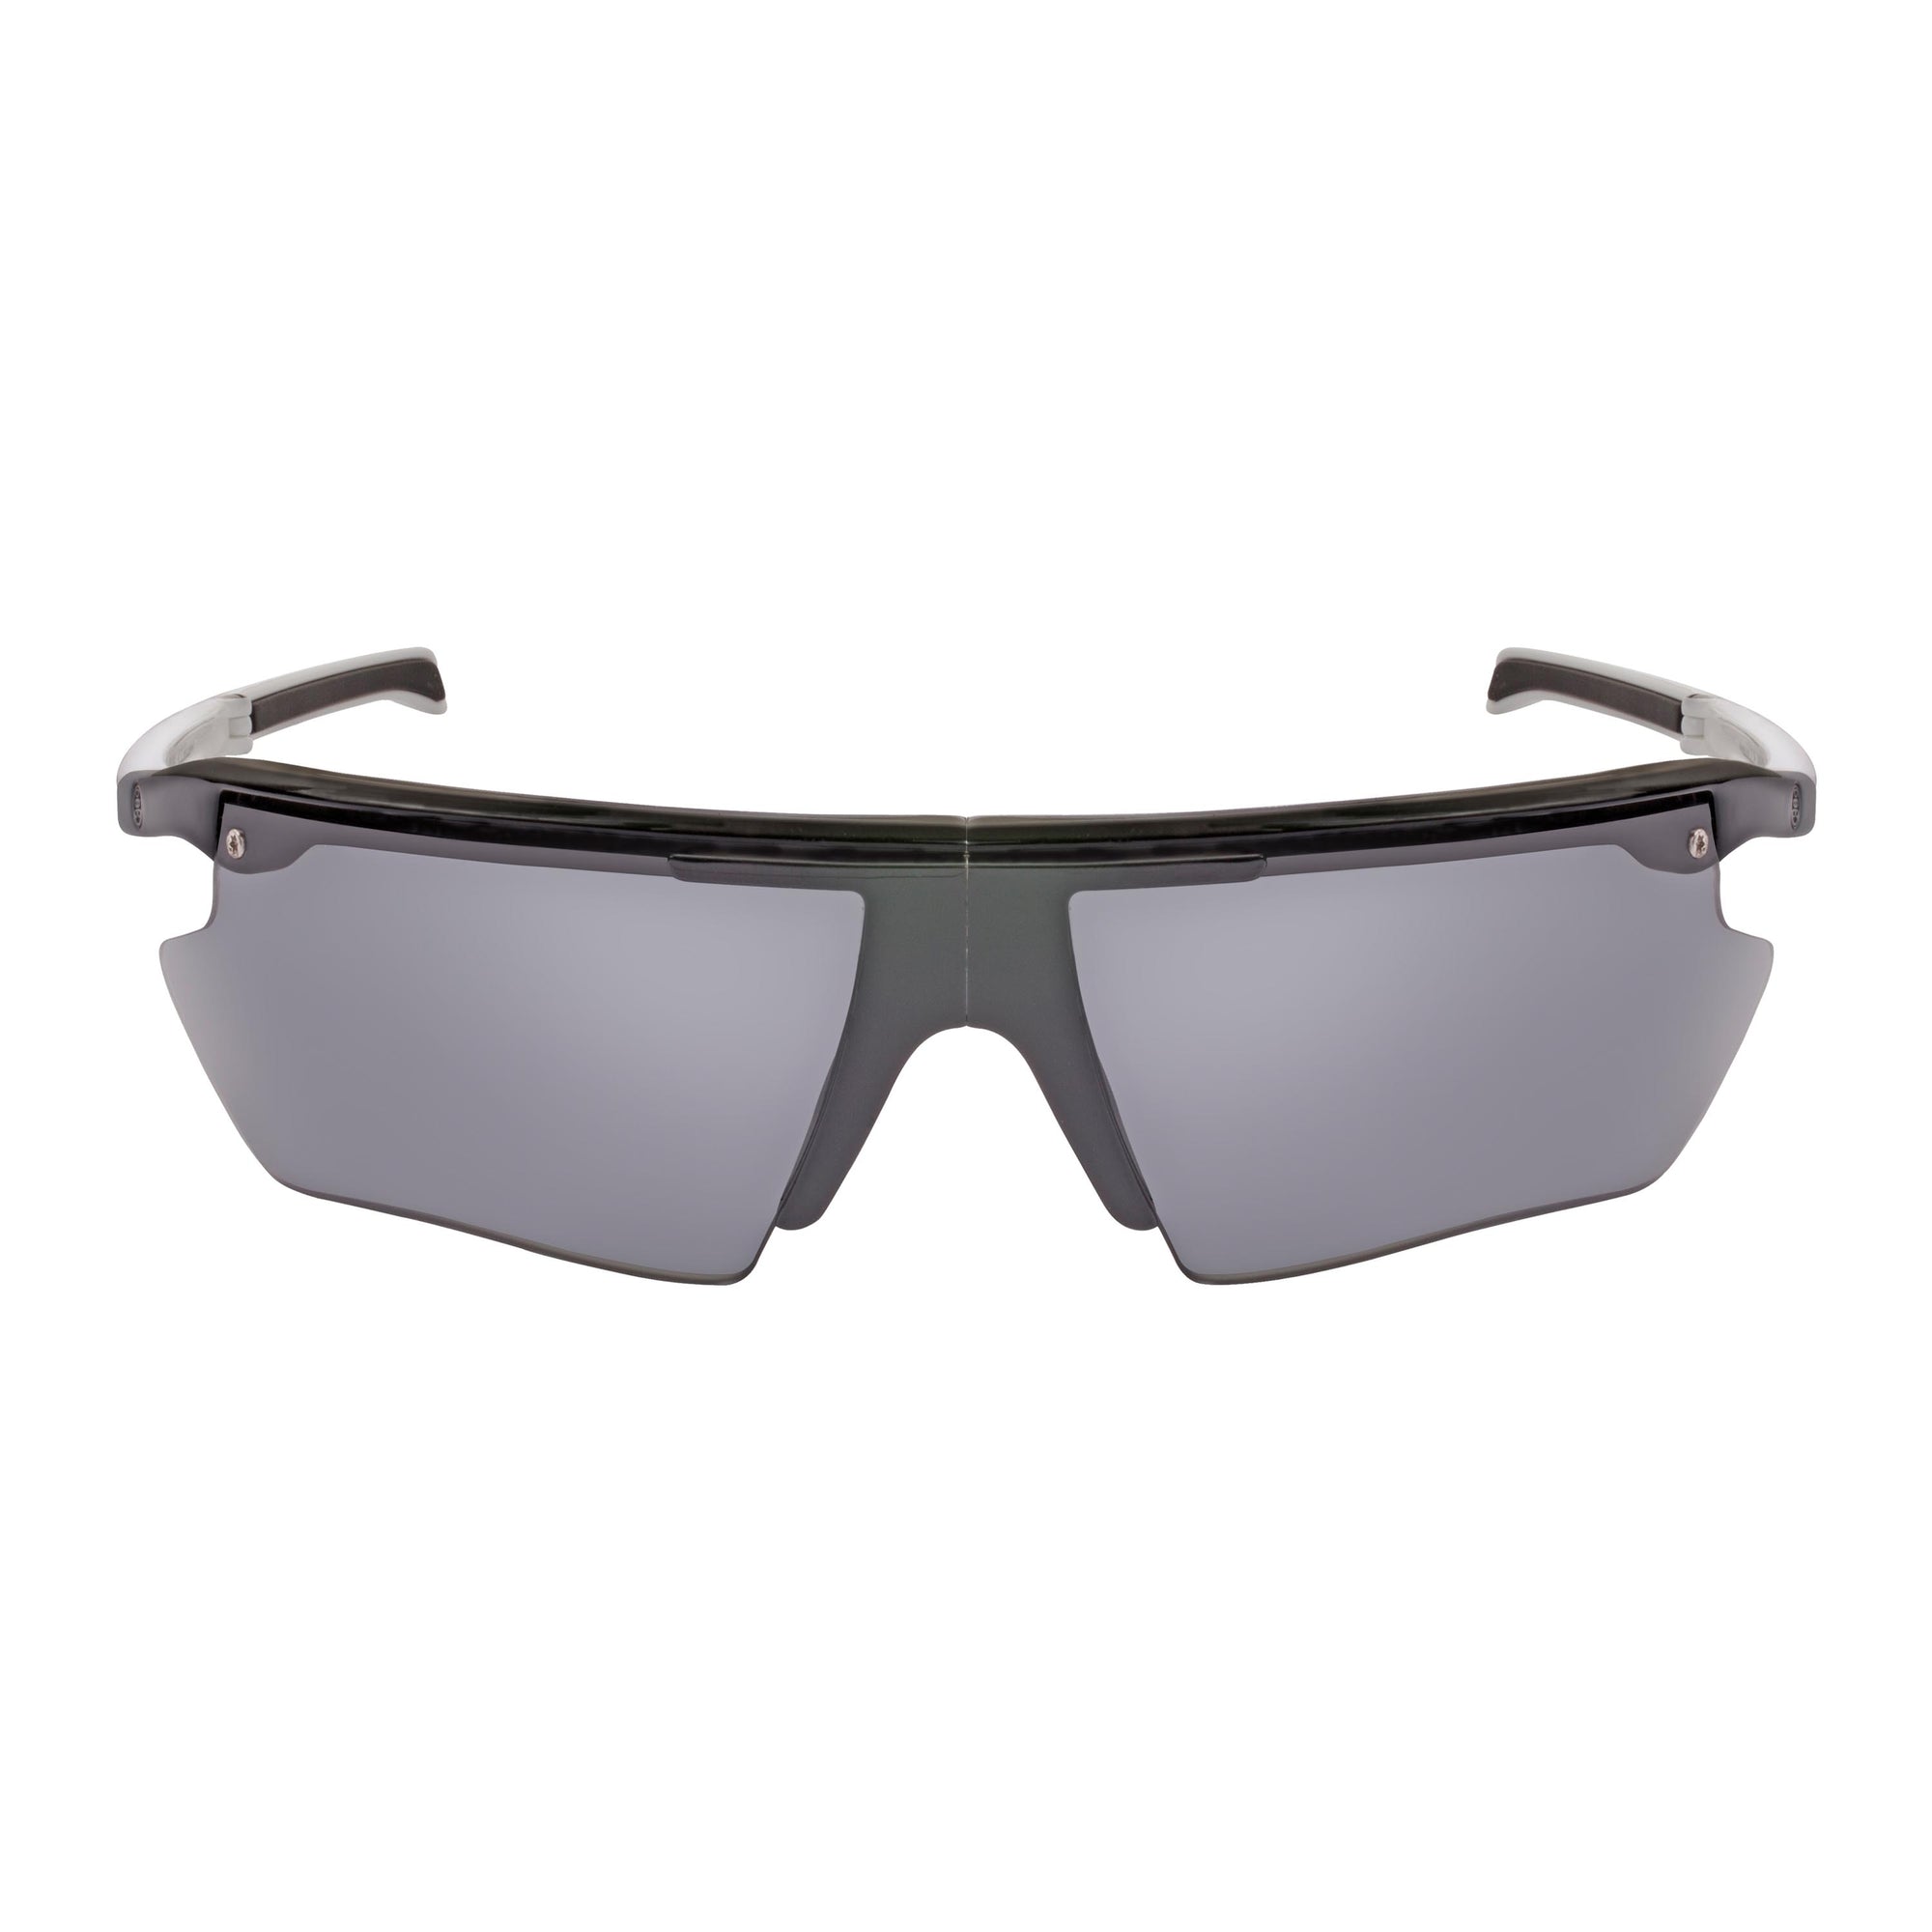 Popticals, Premium Compact Sunglasses, PopEdge, 010091-WGGP, Polarized Sunglasses, Gloss Black and White Frame, Gray Lenses, Glam View